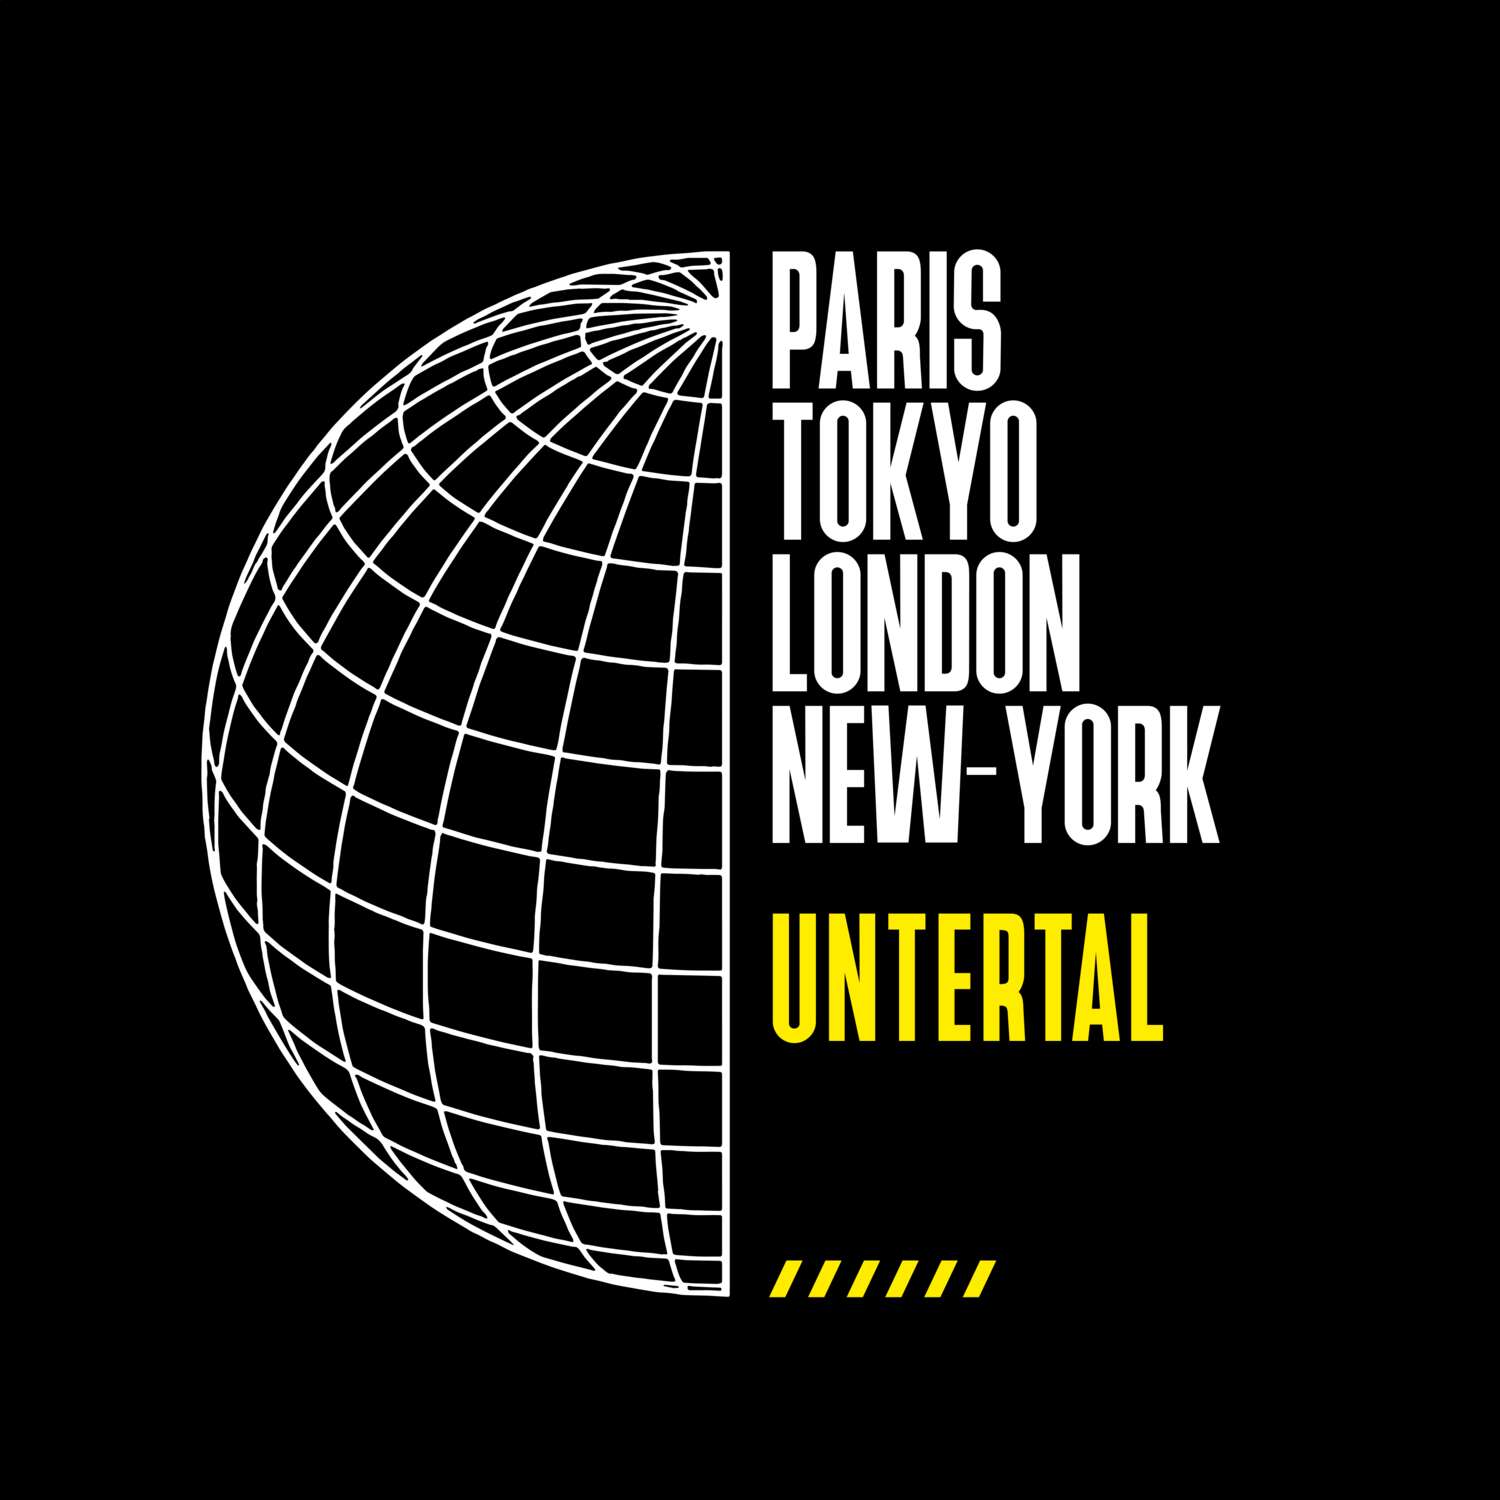 Untertal T-Shirt »Paris Tokyo London«